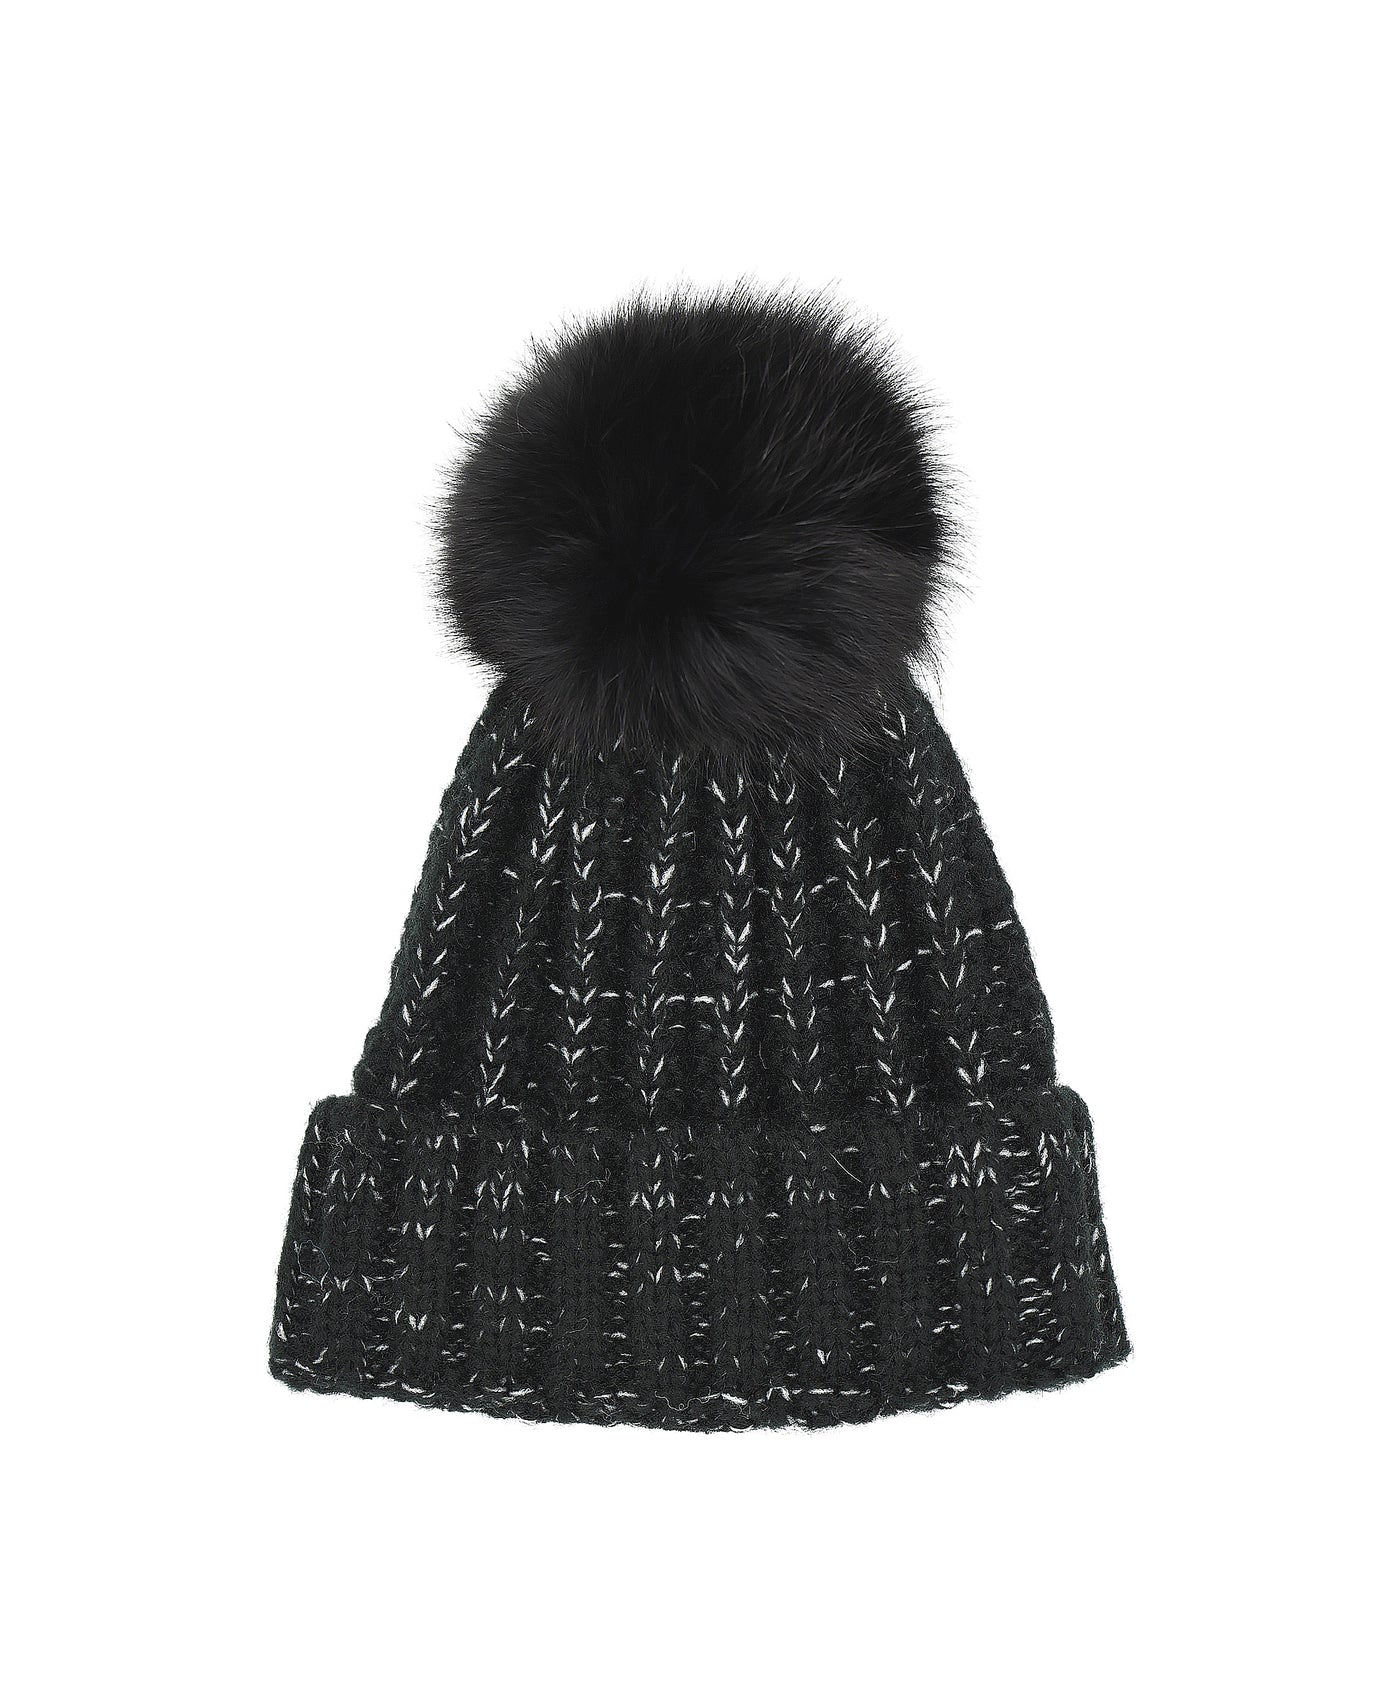 Marble Print Knit Hat w/ Fur Pom image 1